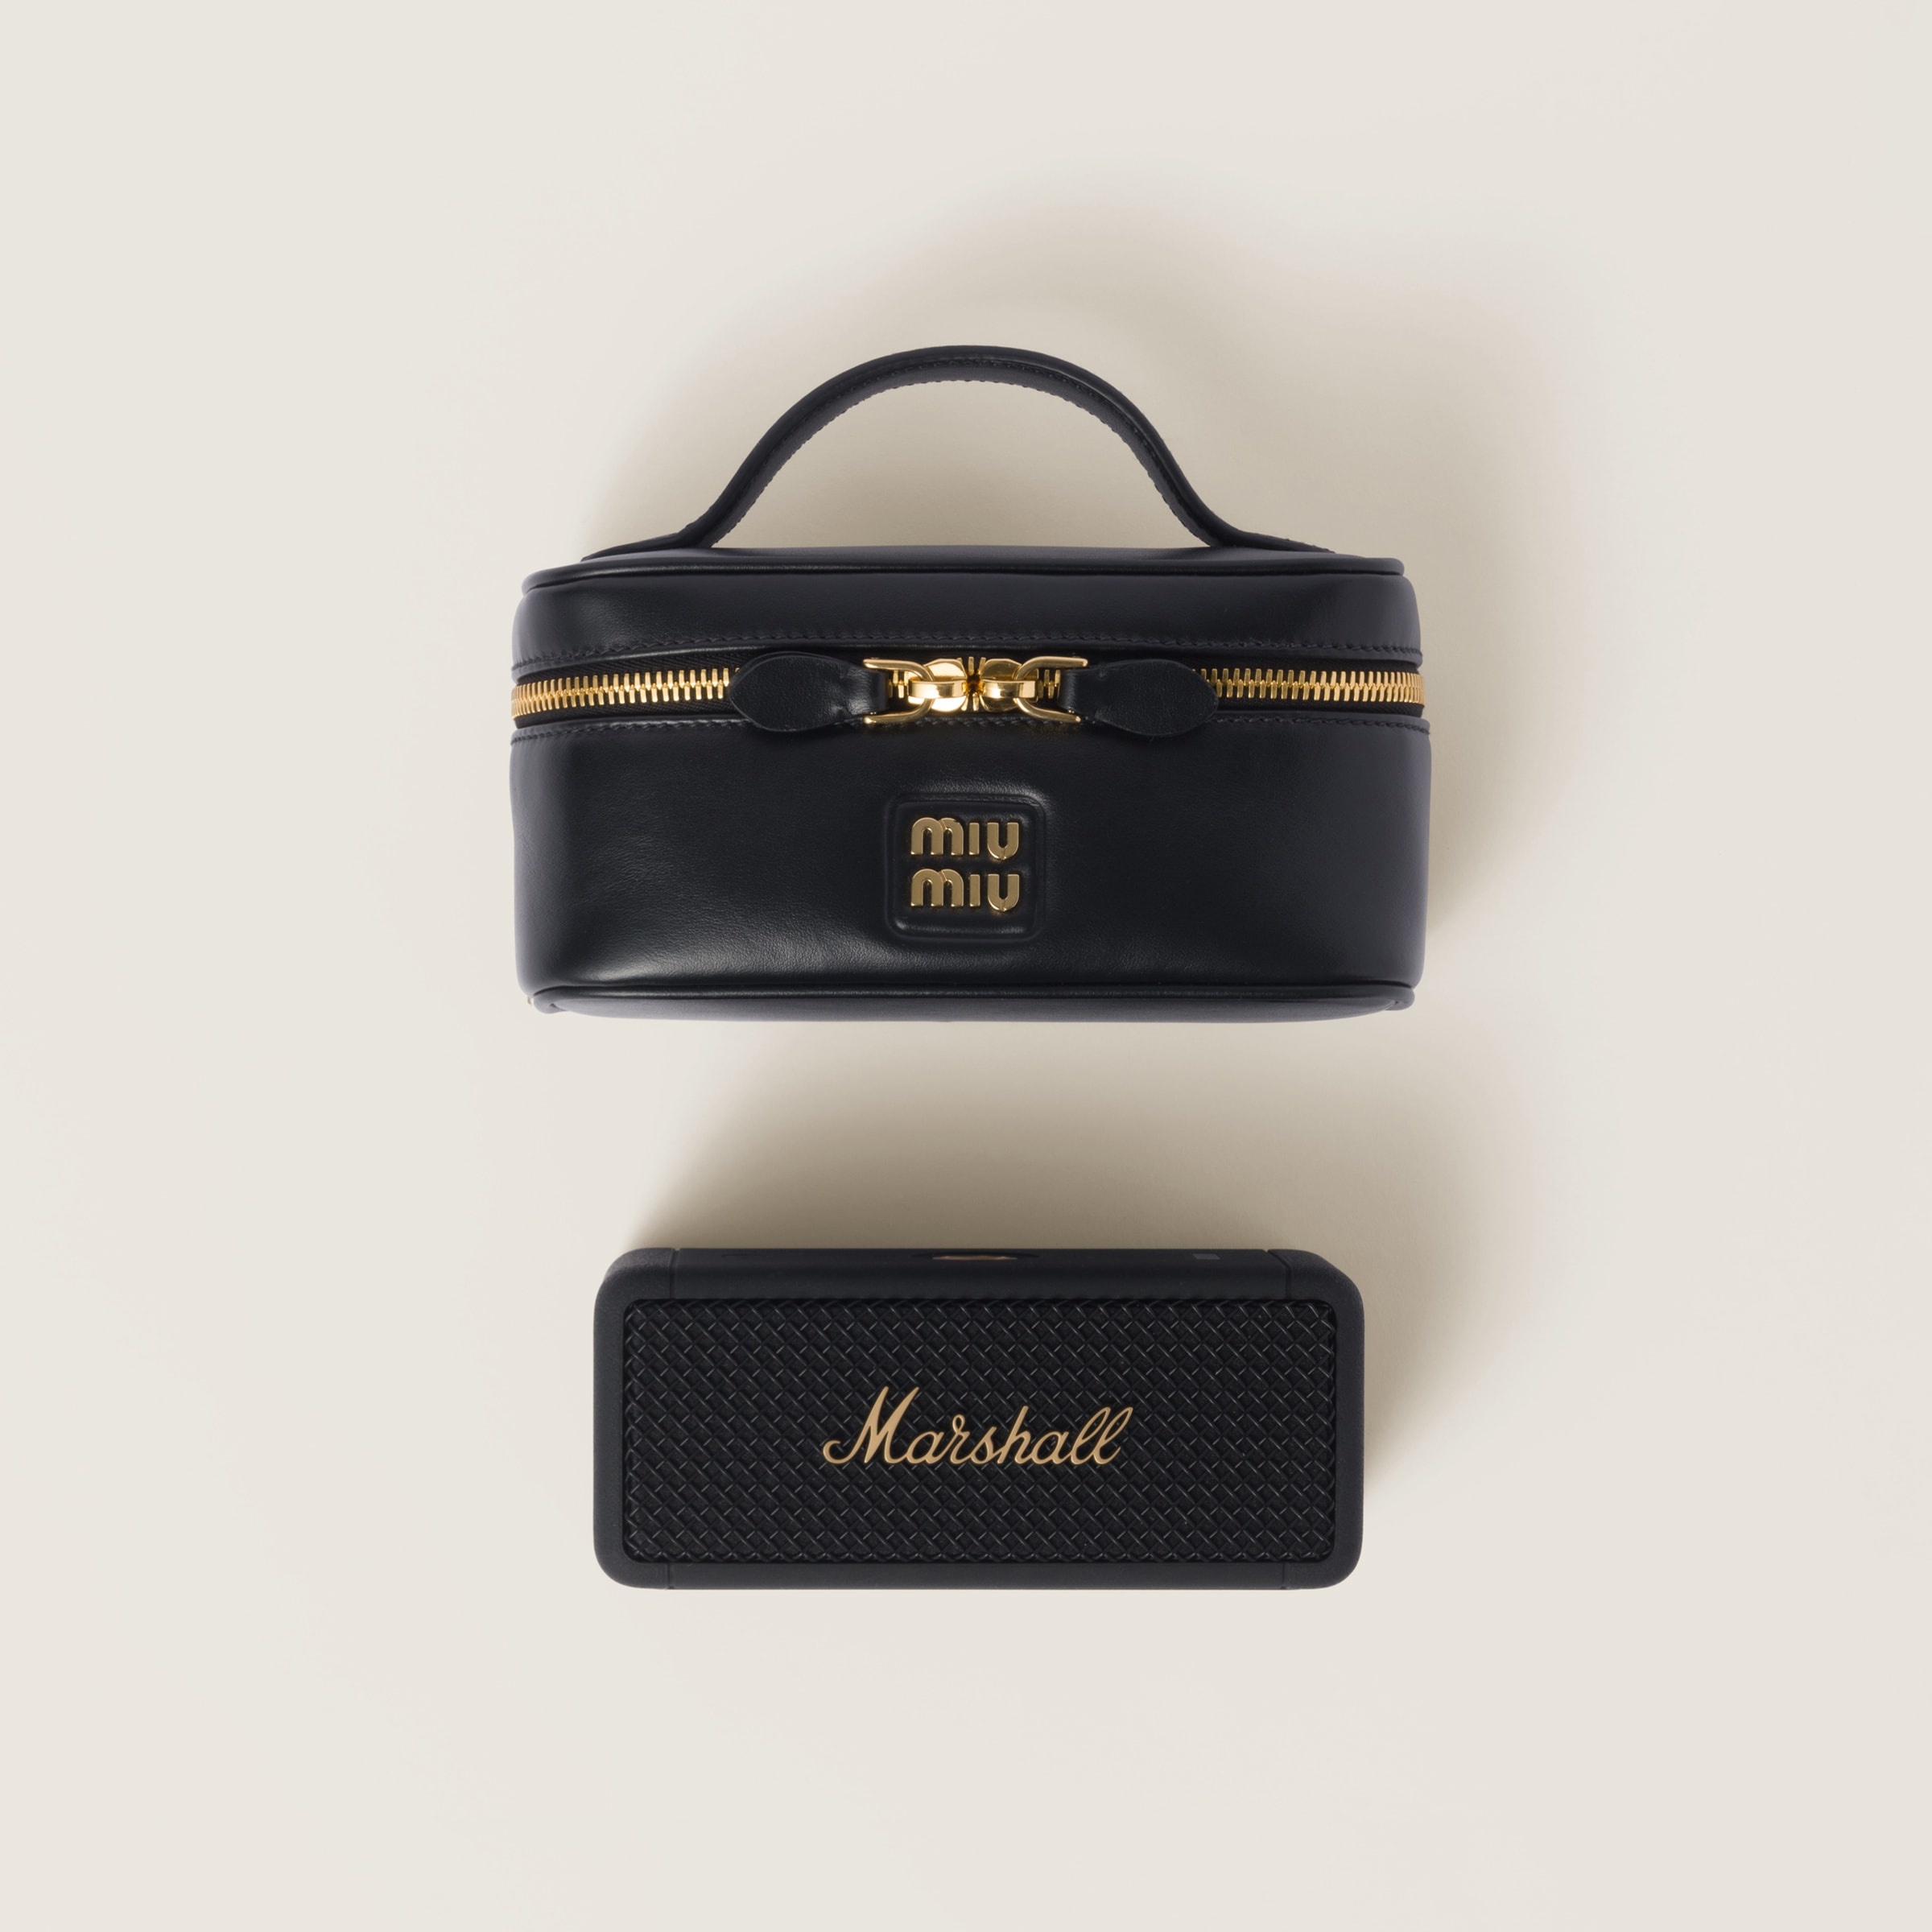 Marshall X Miu Miu speaker with leather case - 1